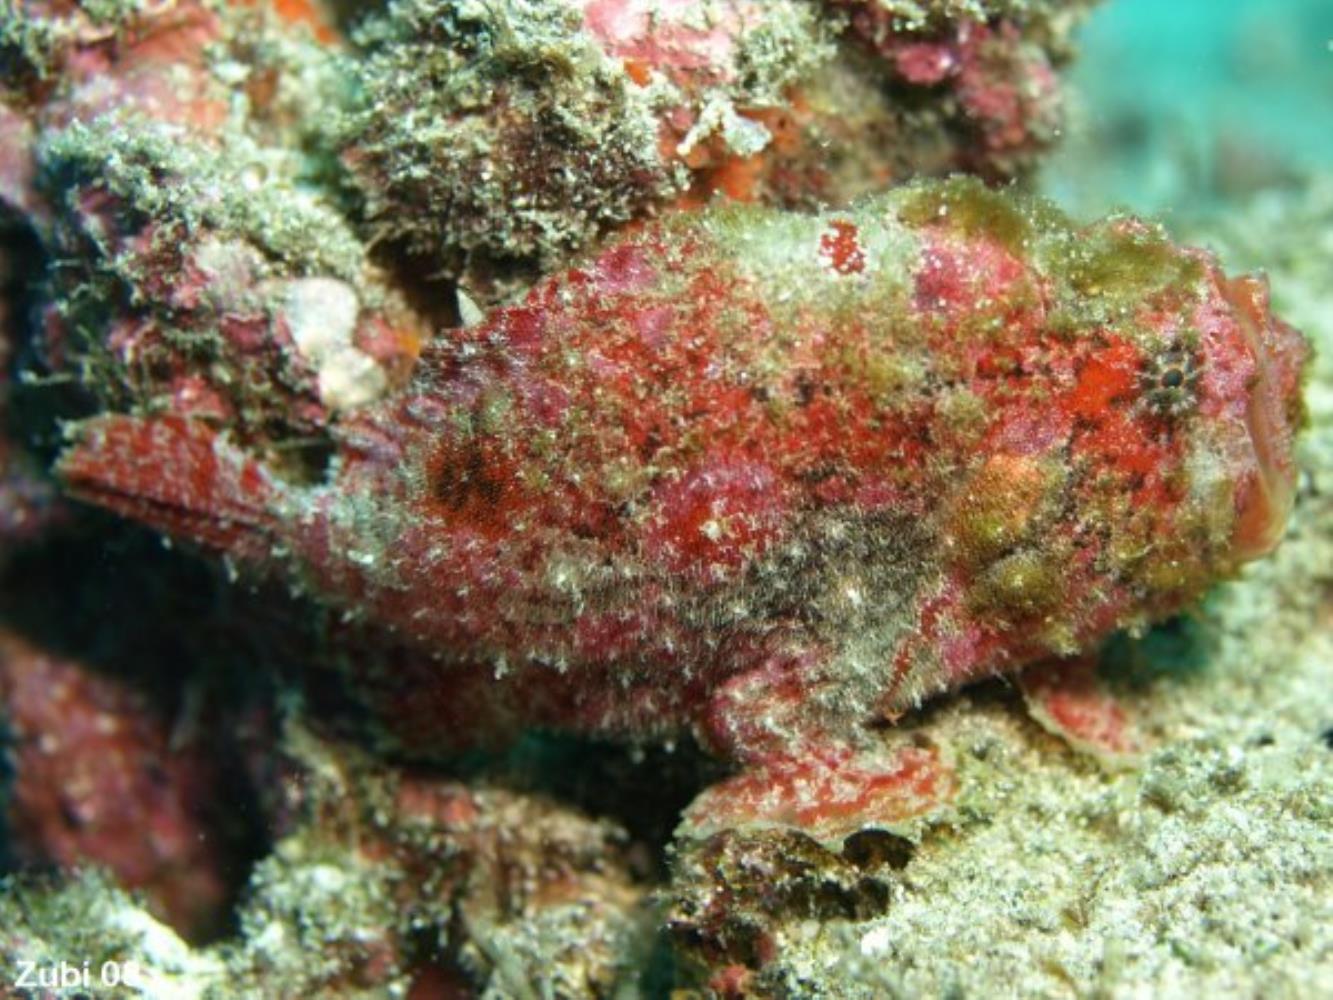 Scarlet Frogfish